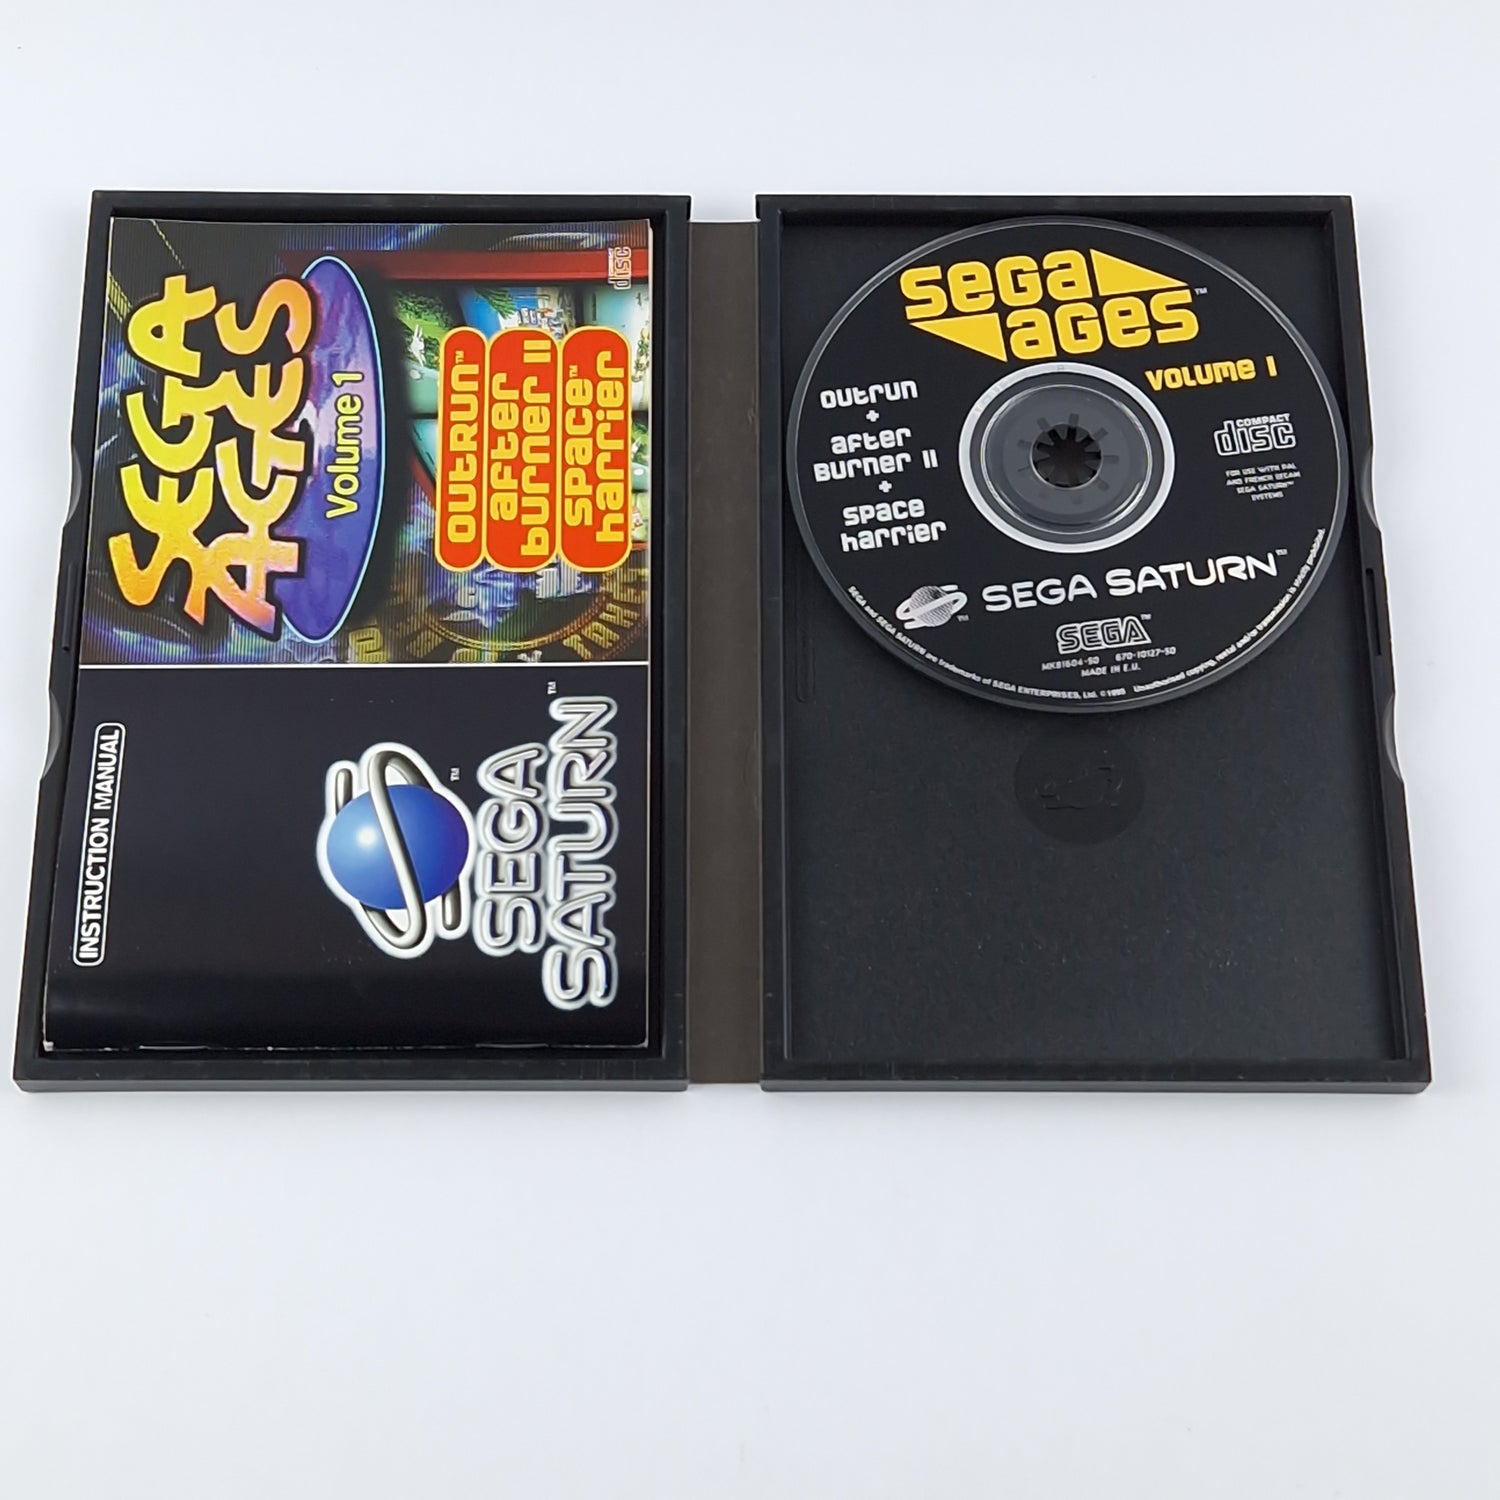 Sega Saturn Game: Sega Ages Volume 1 - OVP Instructions CD PAL Disc Game